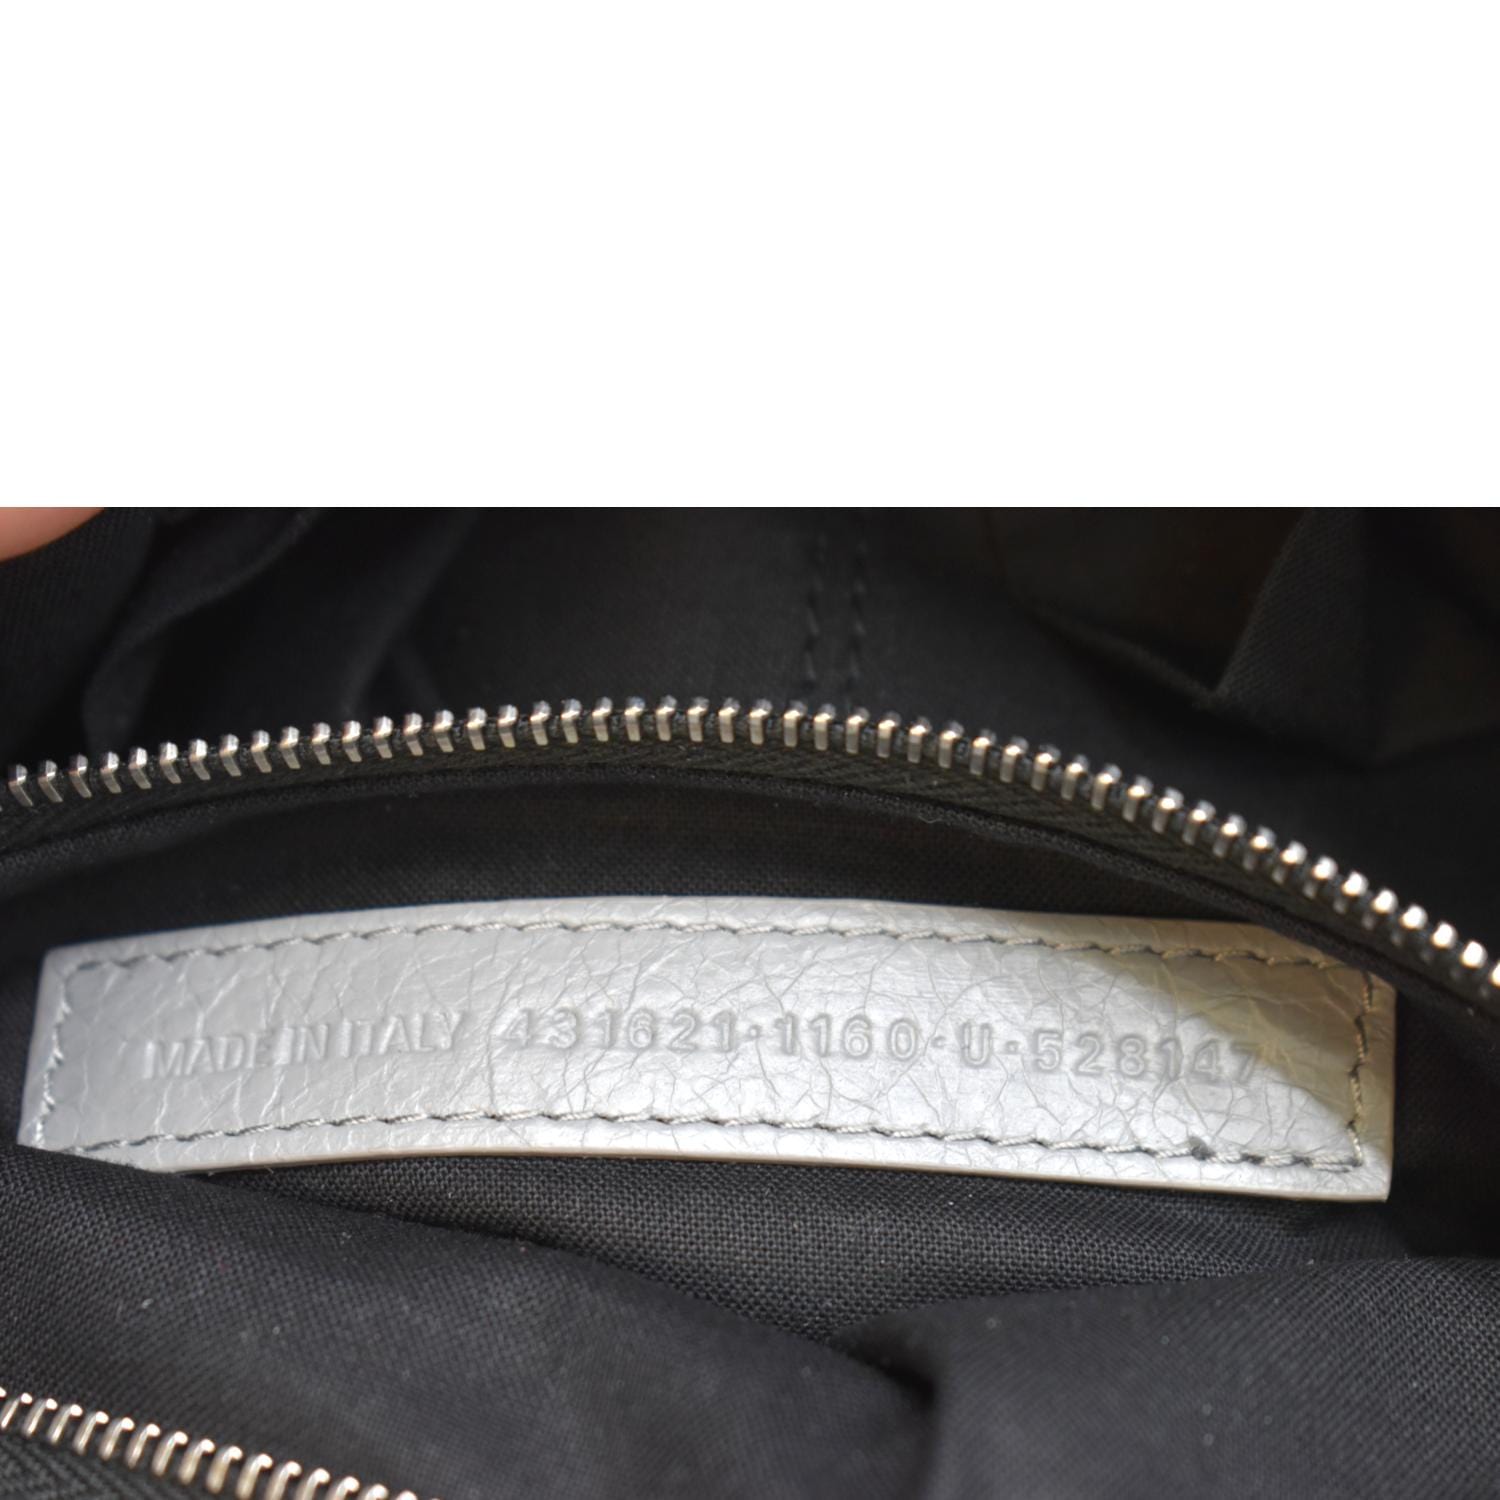 Balenciaga Classic City Grey Shiny Arena Leather Shoulder Bag